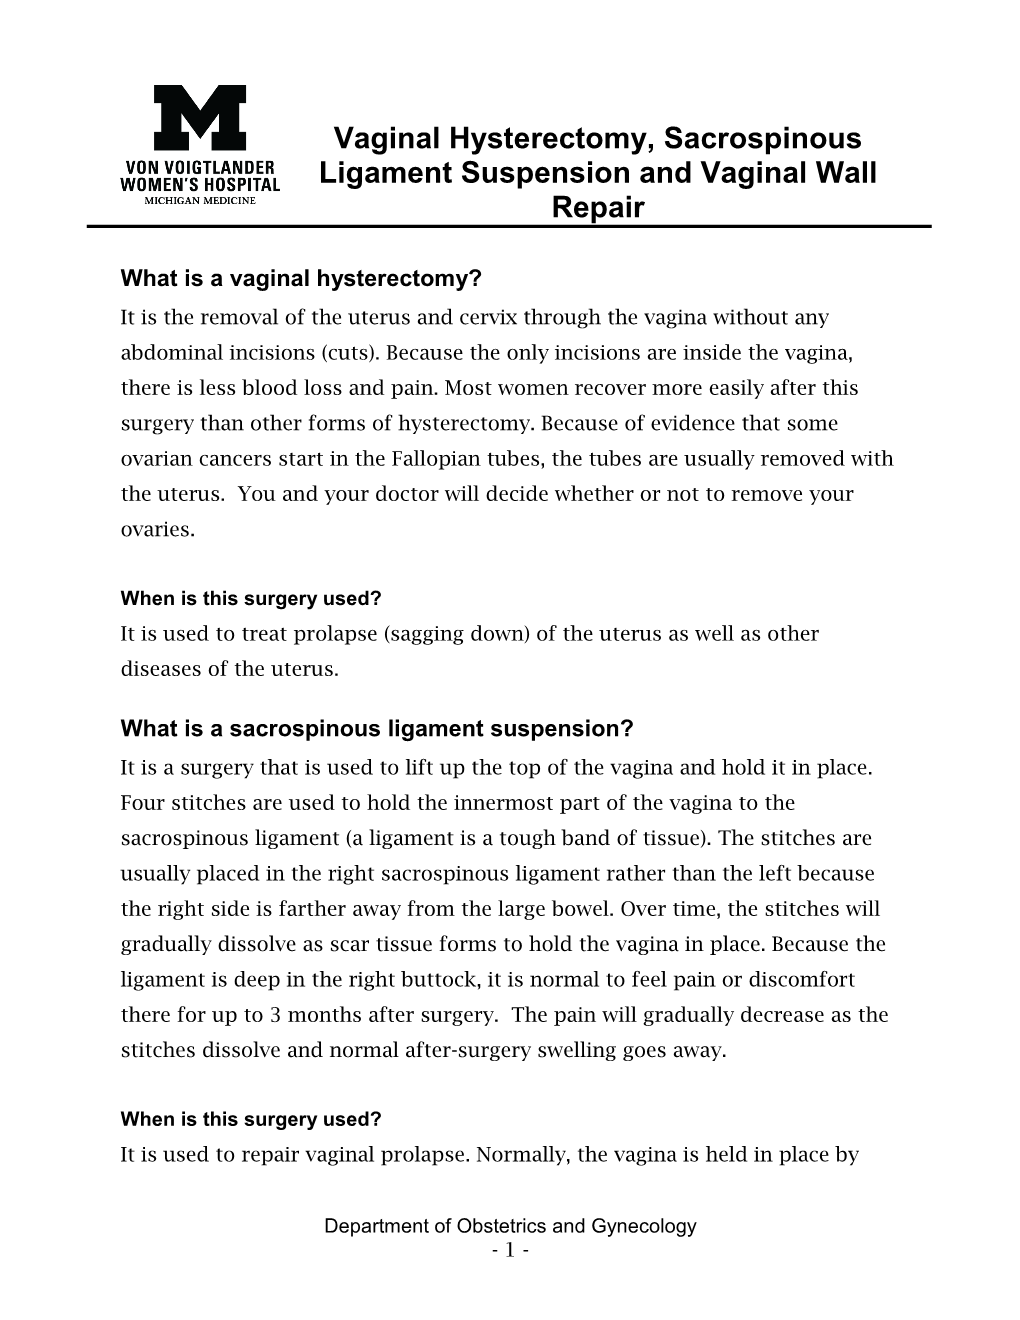 Vaginal Hysterectomy, Sacrospinous Ligament Suspension and Vaginal Wall Repair